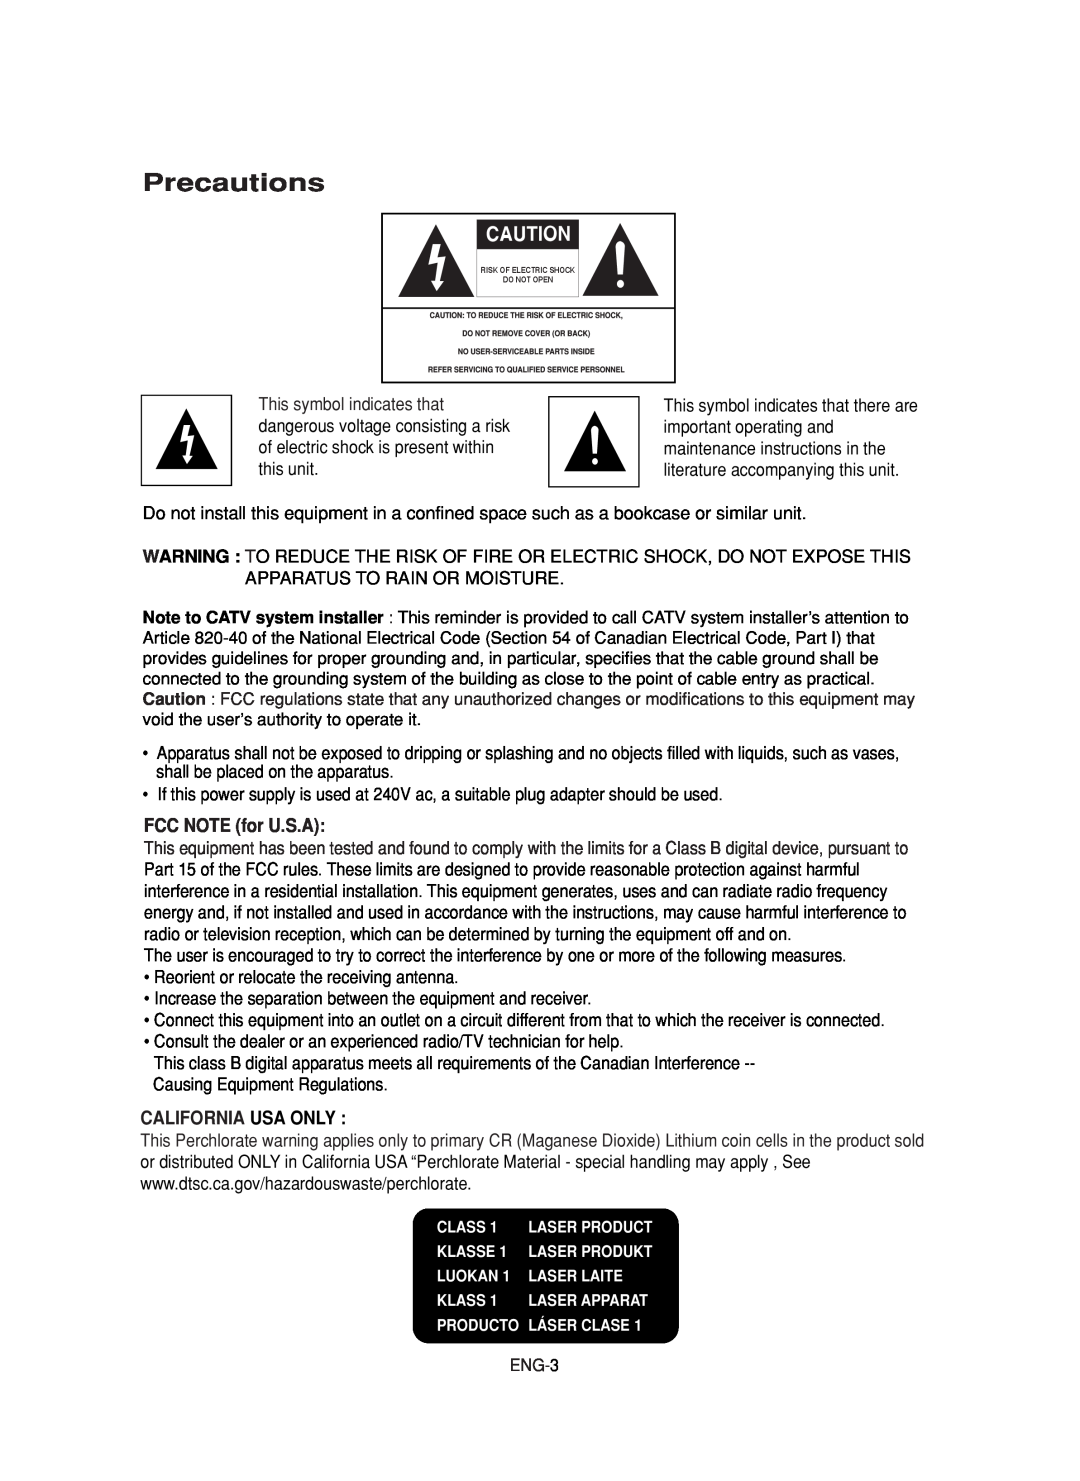 Samsung DVD-F1080, DVD-FP580 manual Precautions, FCC NOTE for U.S.A, California Usa Only 